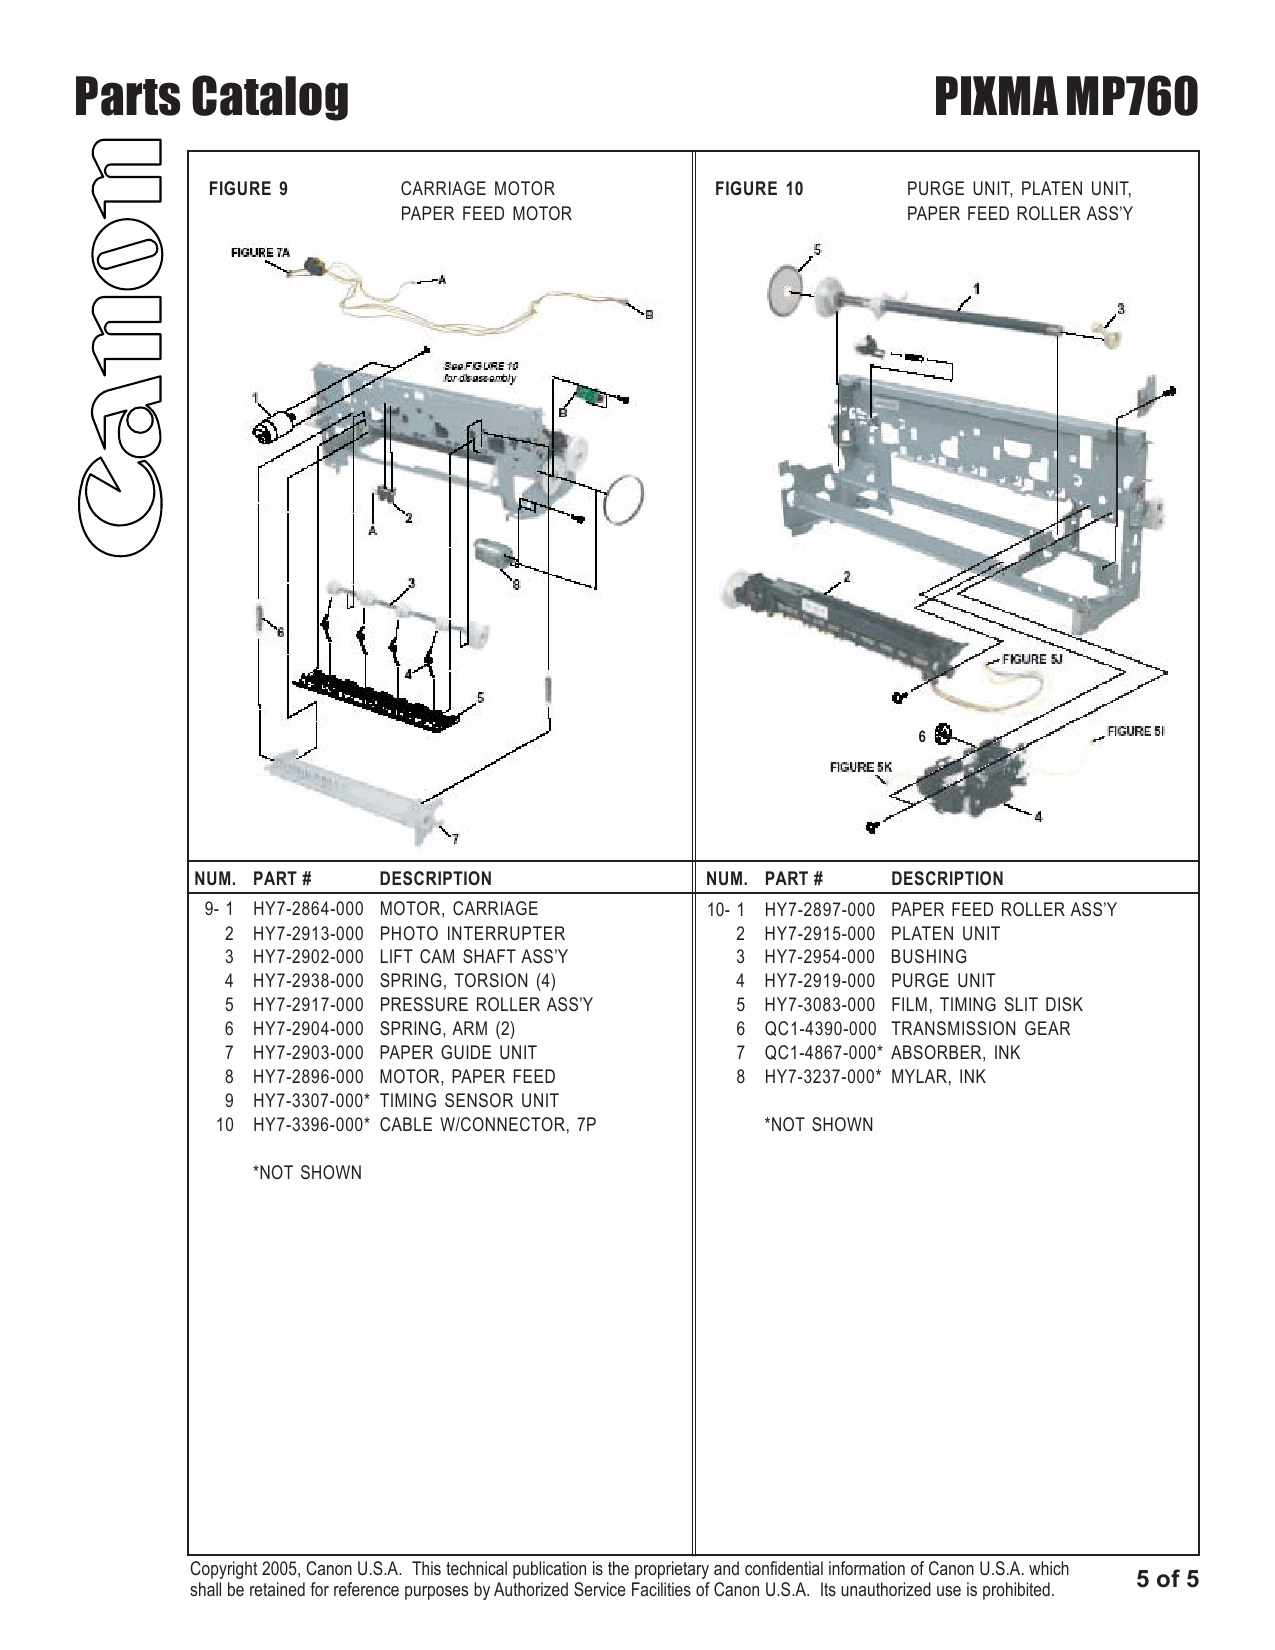 Canon PIXMA MP760 Parts Catalog Manual-6